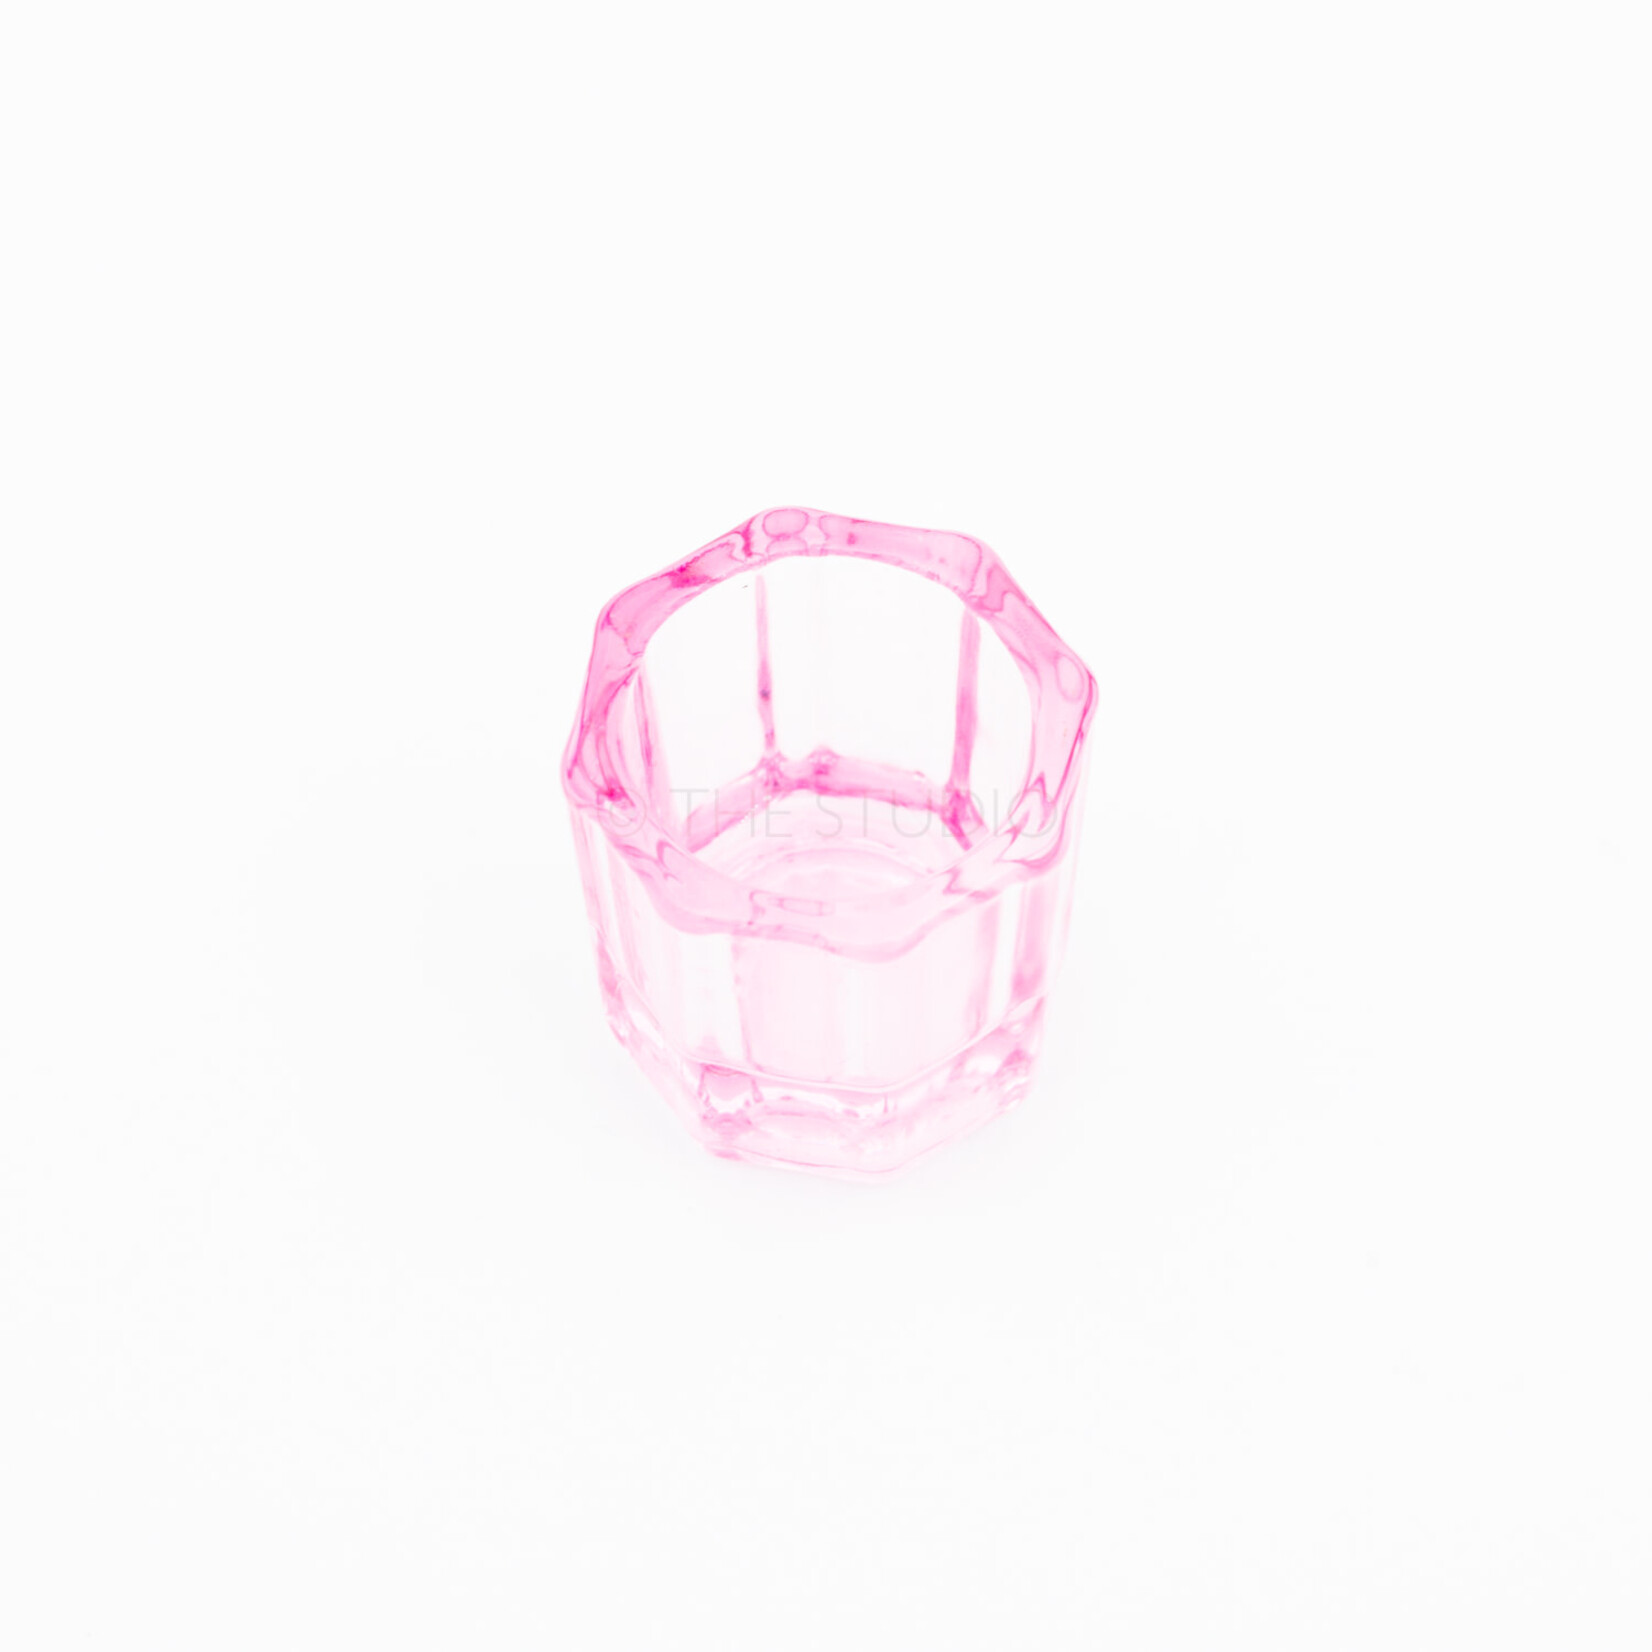 The Studio Glass Dappen Dish - Pink